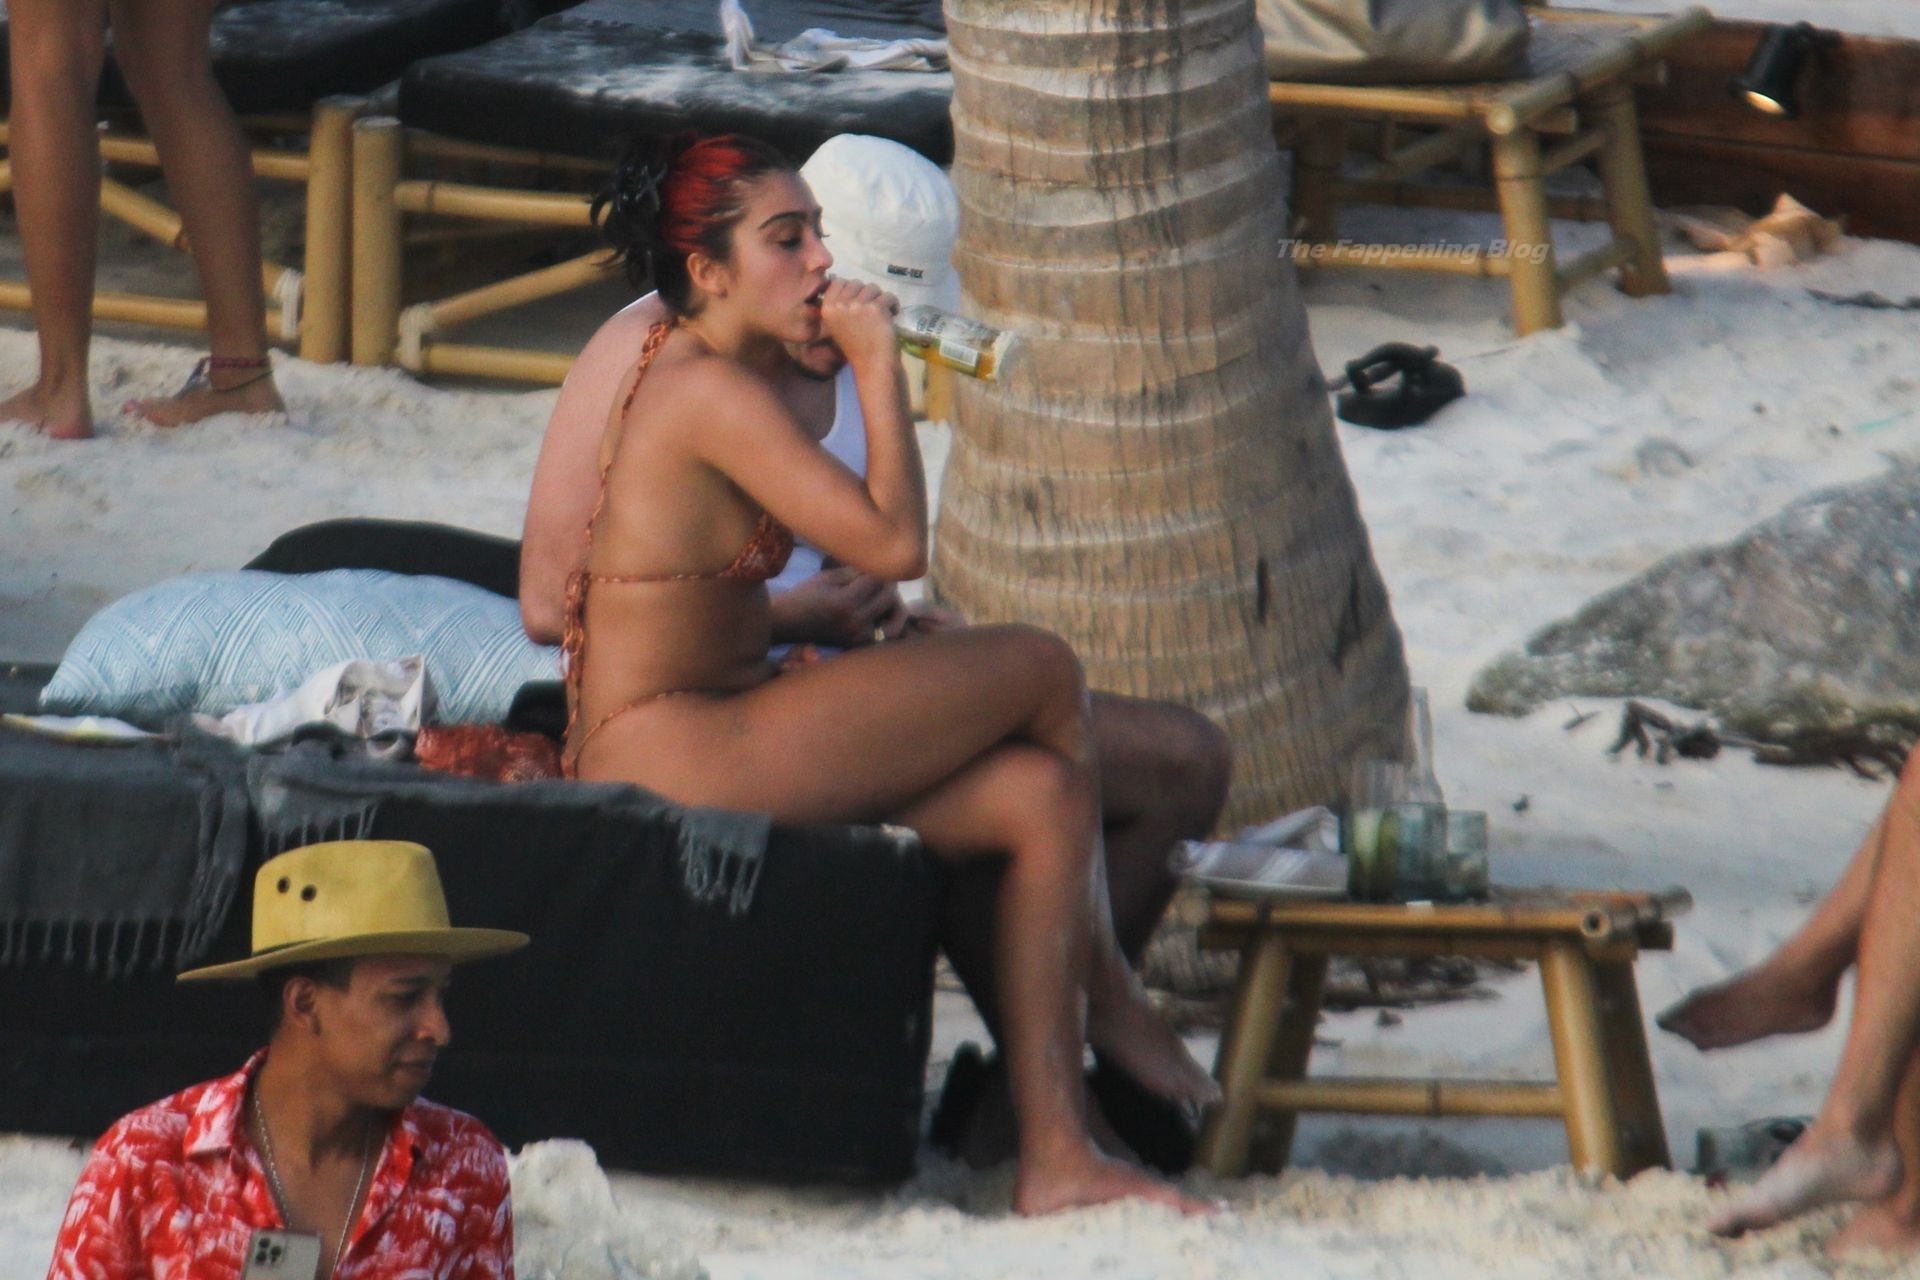 Lourdes Leon Wears an Itty Bit
ty Bikini on the Beach in Tulum (52 Photos)